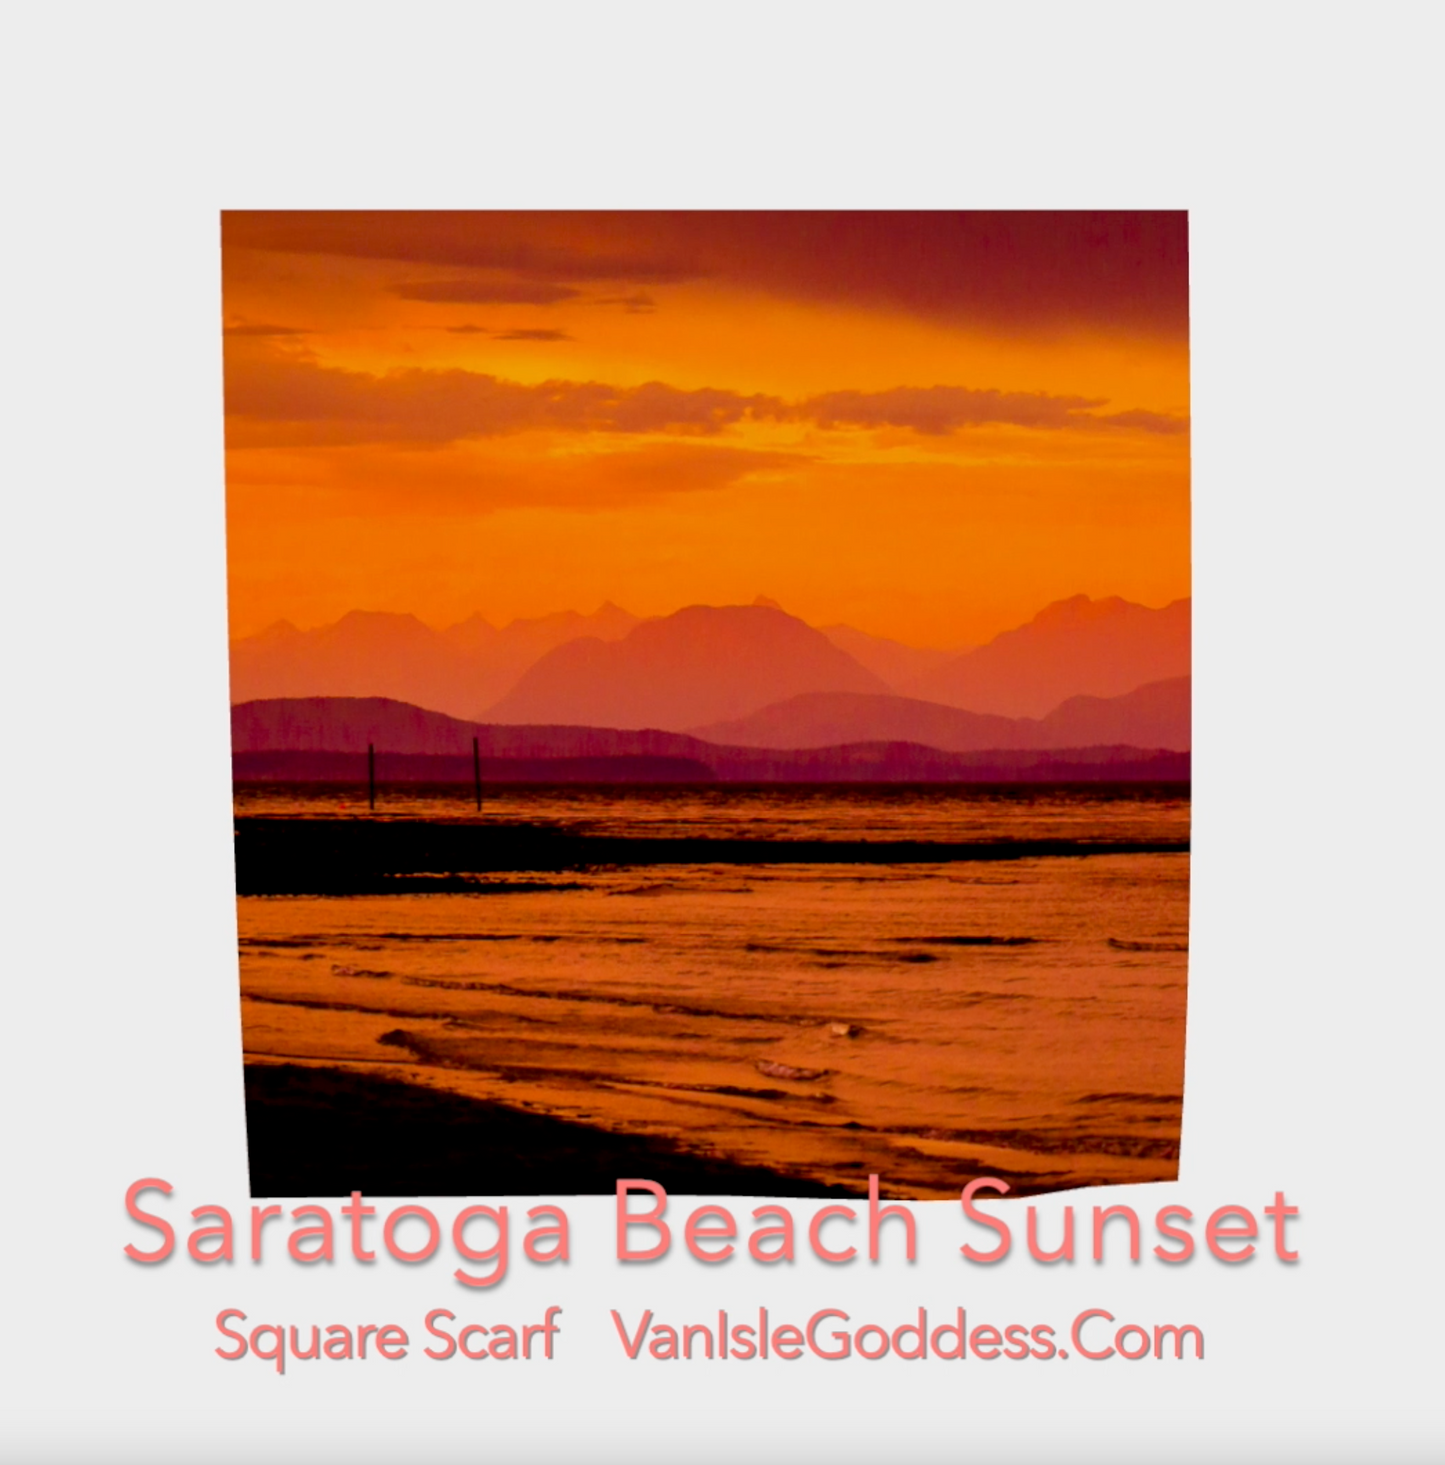 Saratoga Beach Sunset square scarf shown full size.